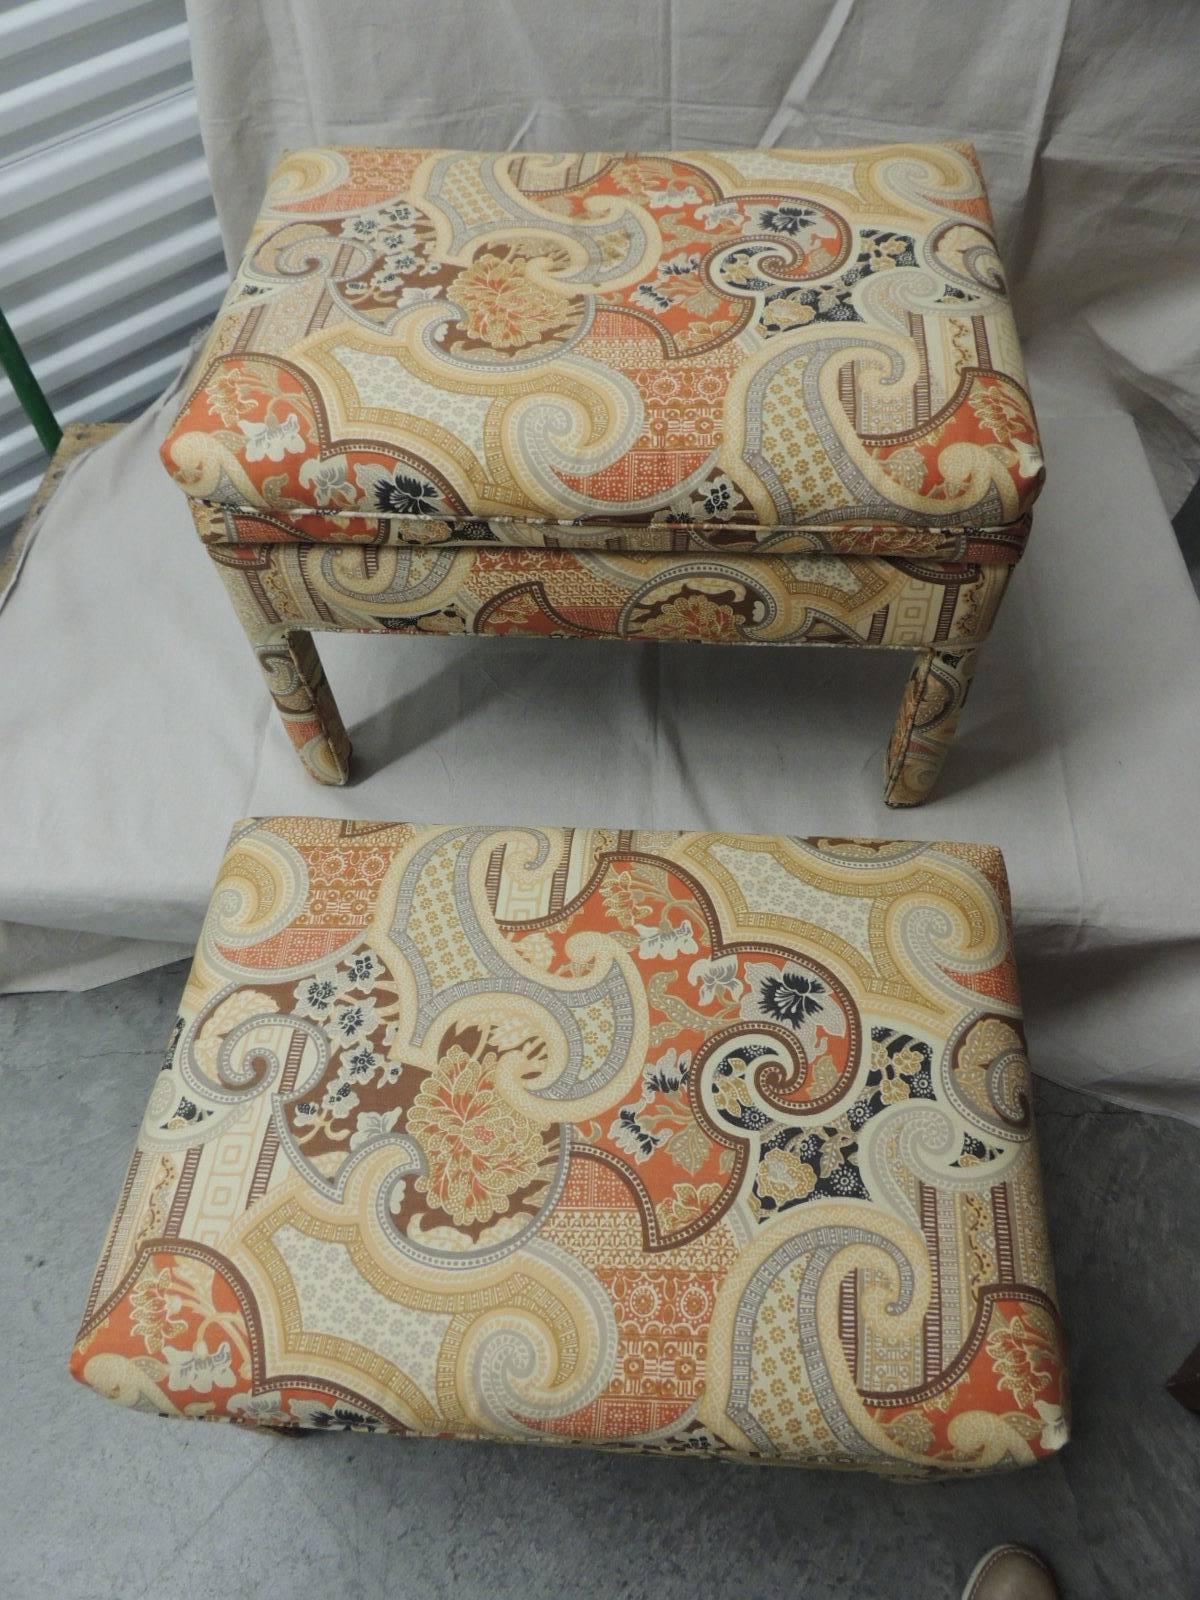 Hand-Crafted Vintage Rectangular Batik Paisley Fully Upholster Ottoman